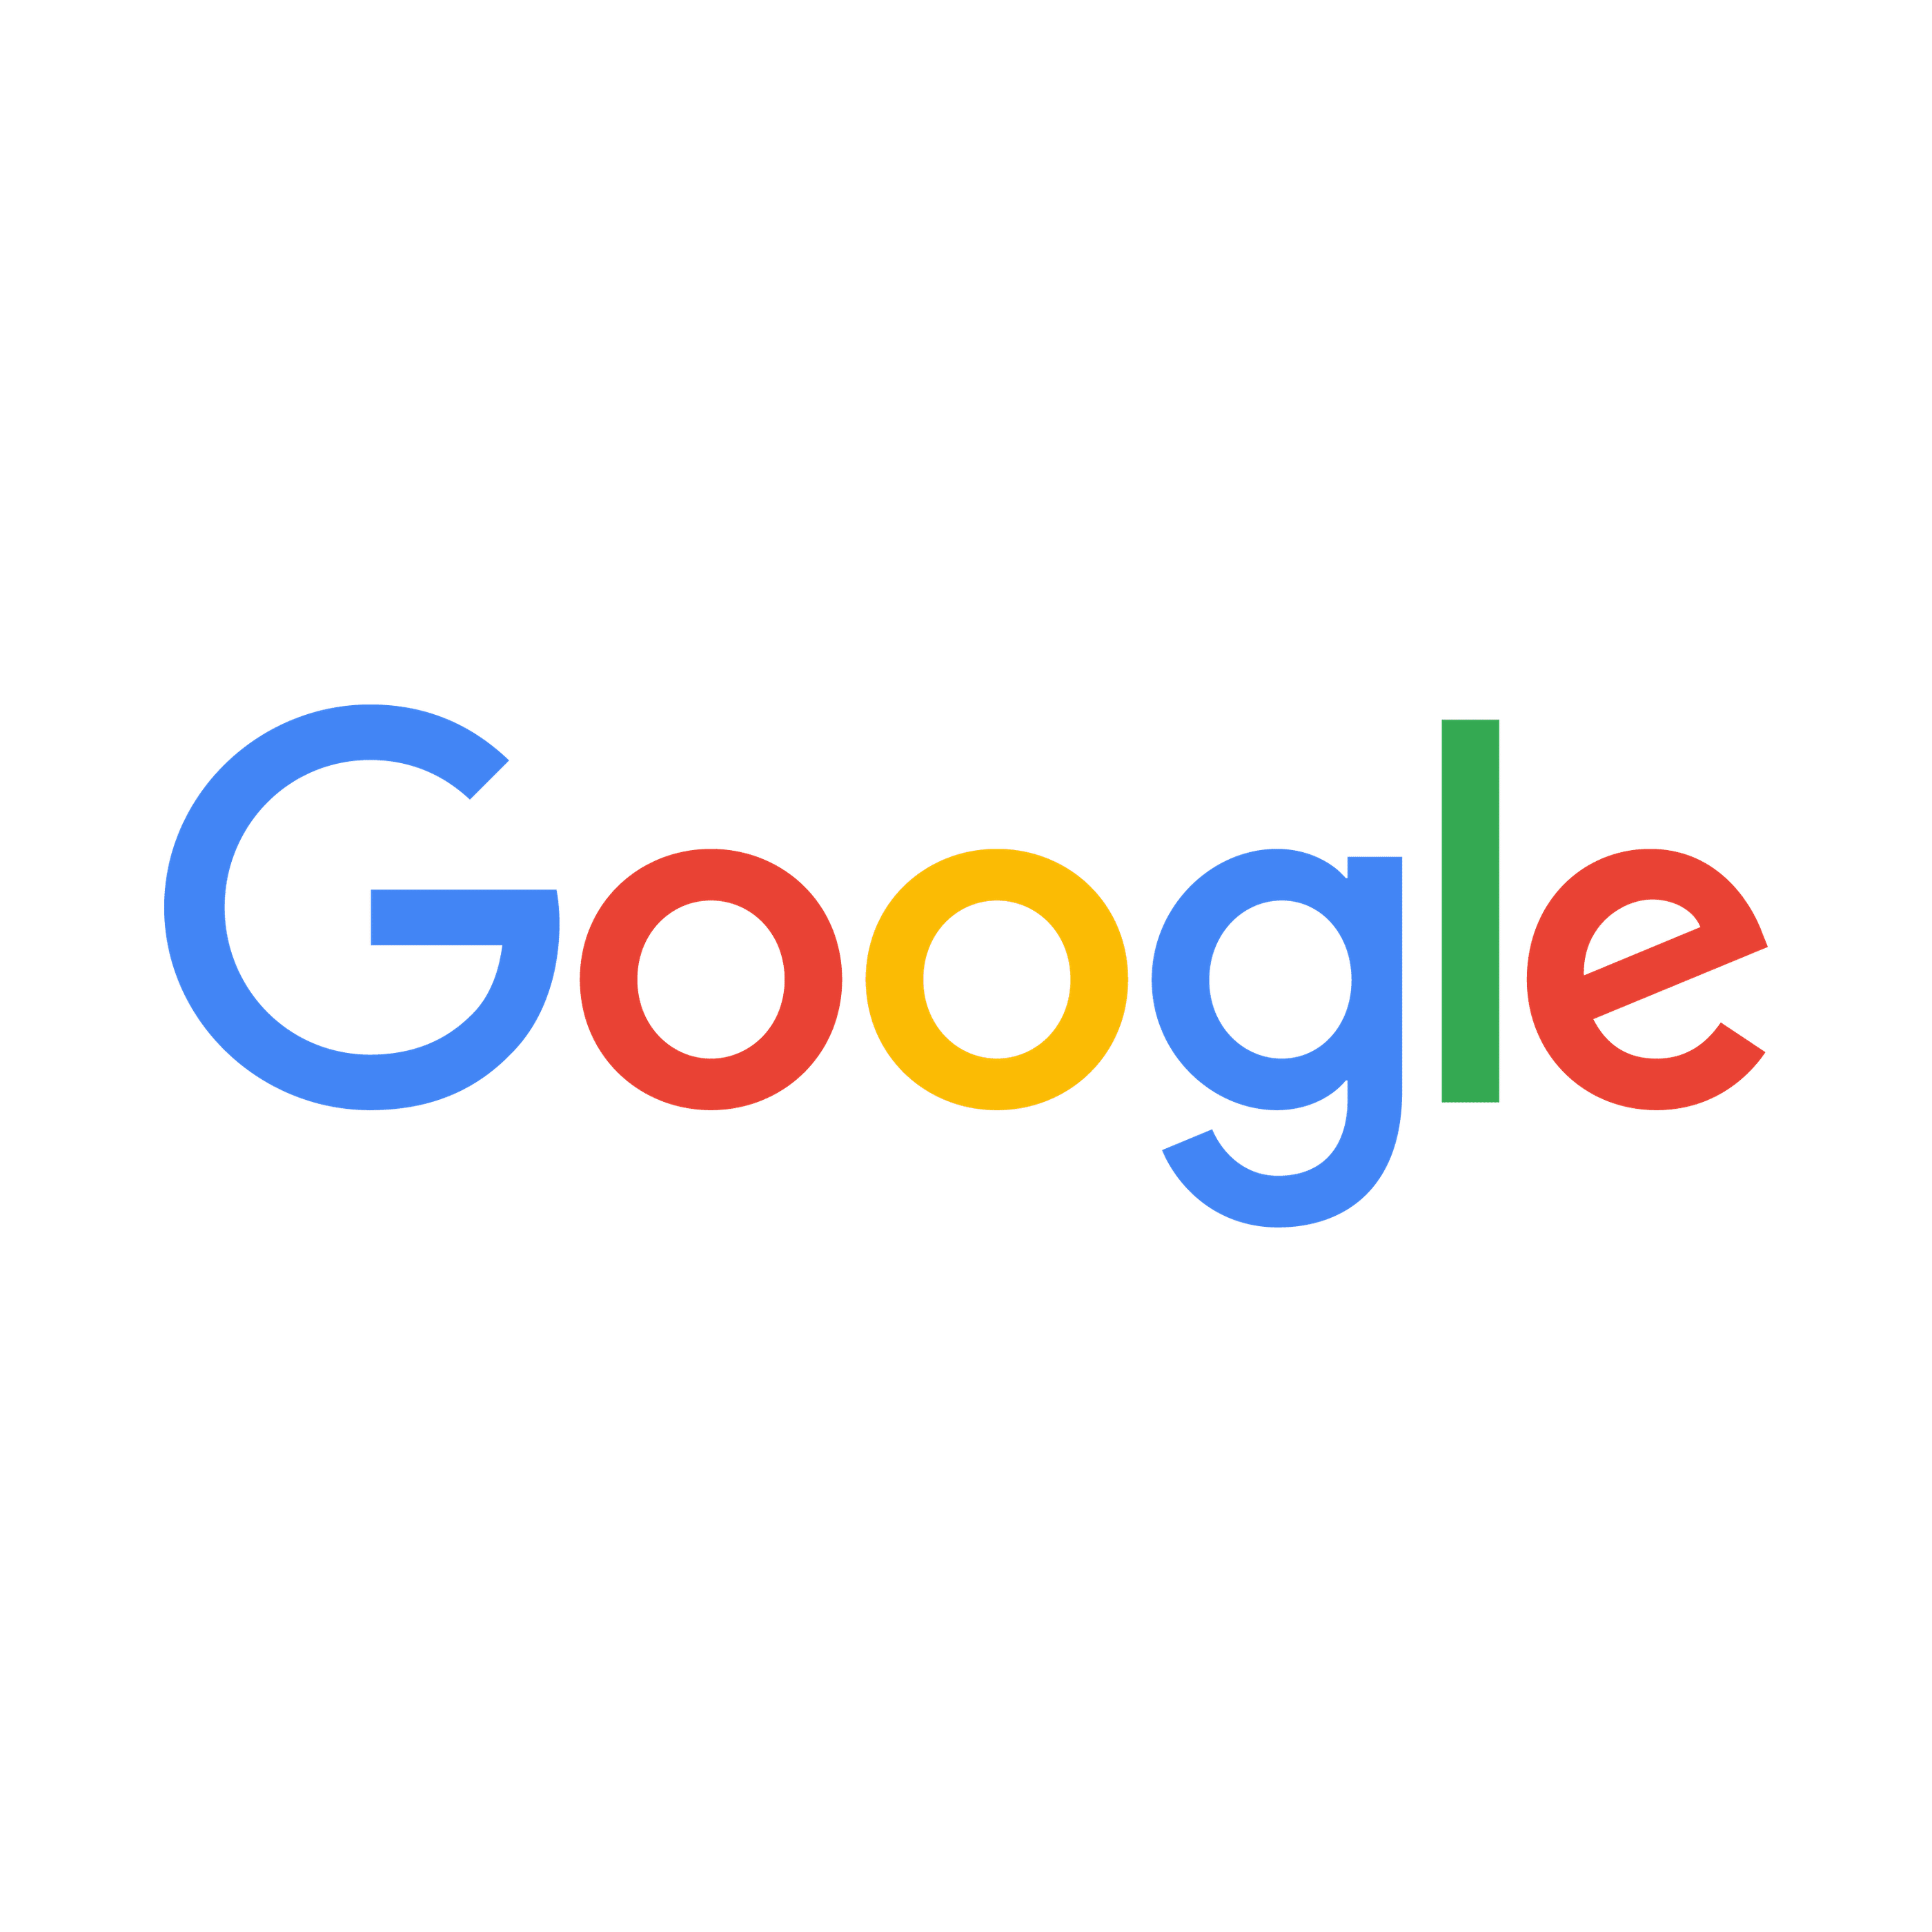 Free Google Services